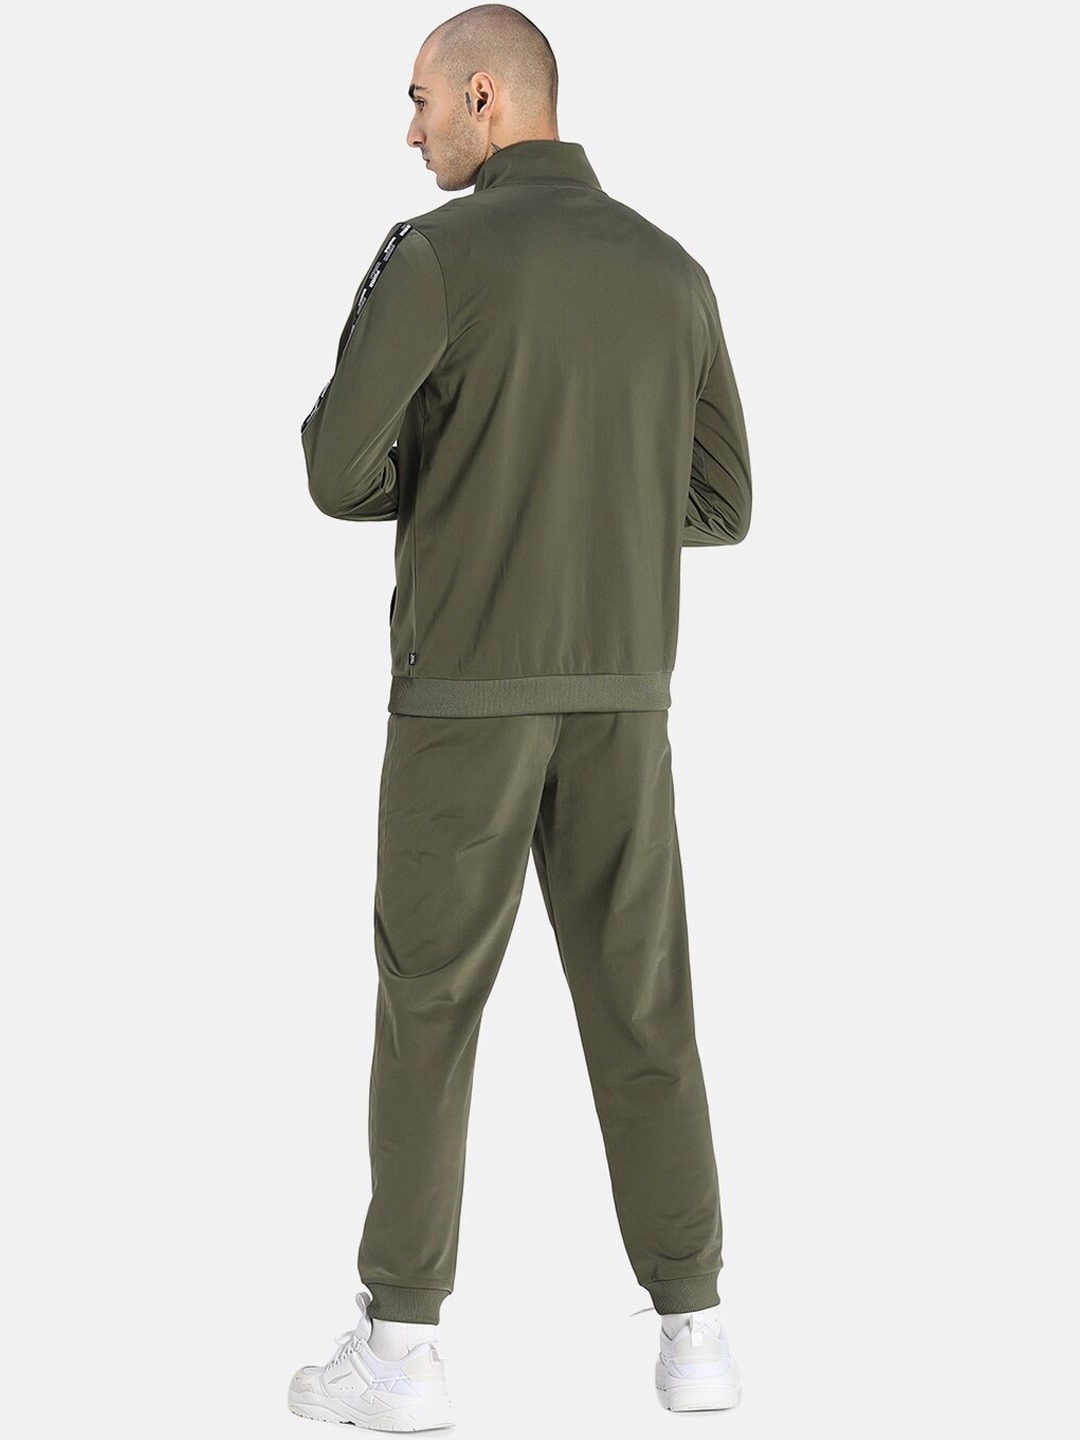 Clothing Tracksuits | Puma Men Olive Green Regular Fit Track Suit - OU57318